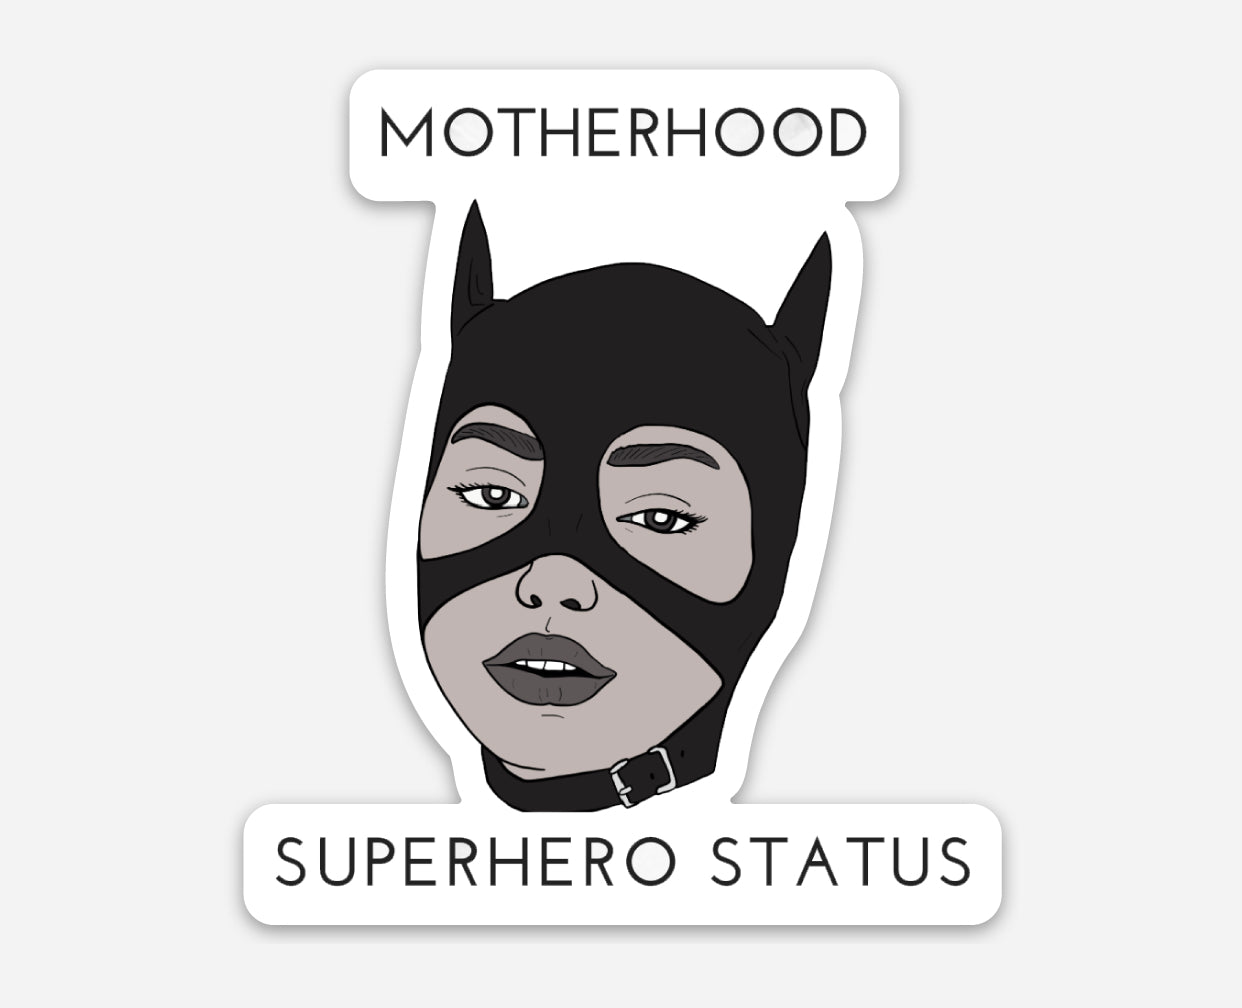 Motherhood Superhero Status magnet - The Rebel Tribe - accessories, outerwear, magnet, badge, superhero, status badge, motherhood, mother's special